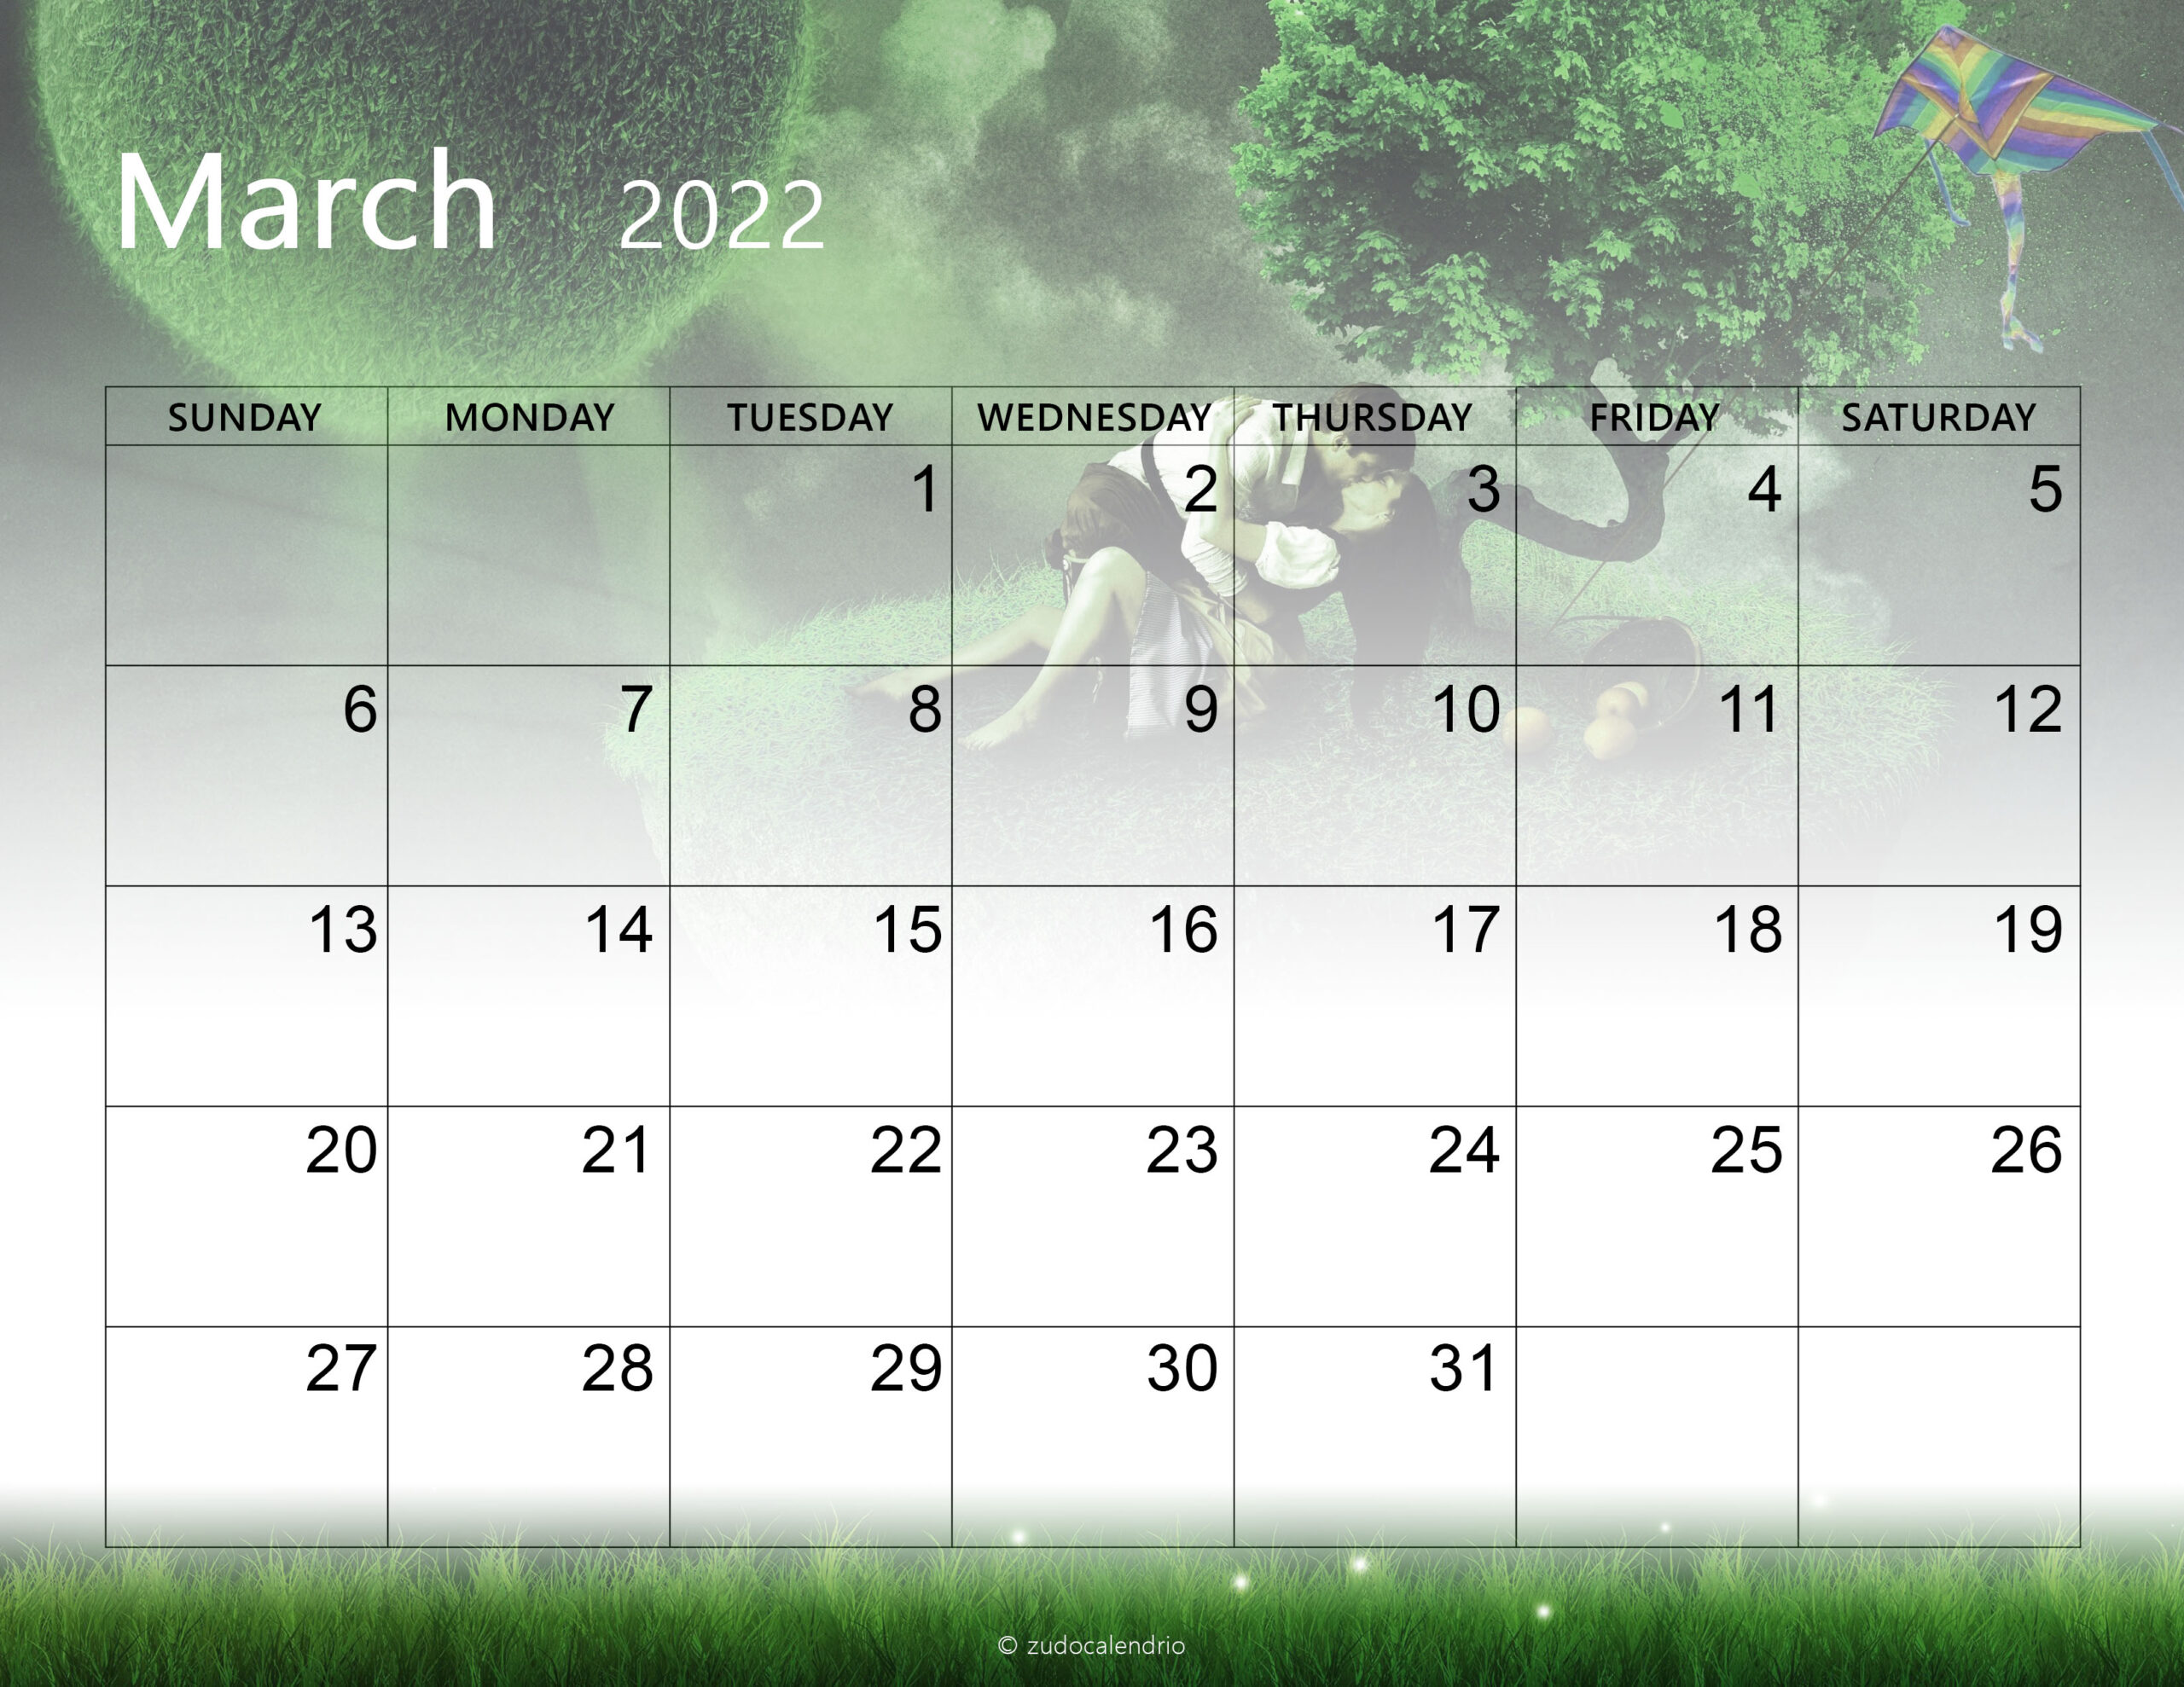 March 2022 Calendar Wallpapers  Wallpaper Cave